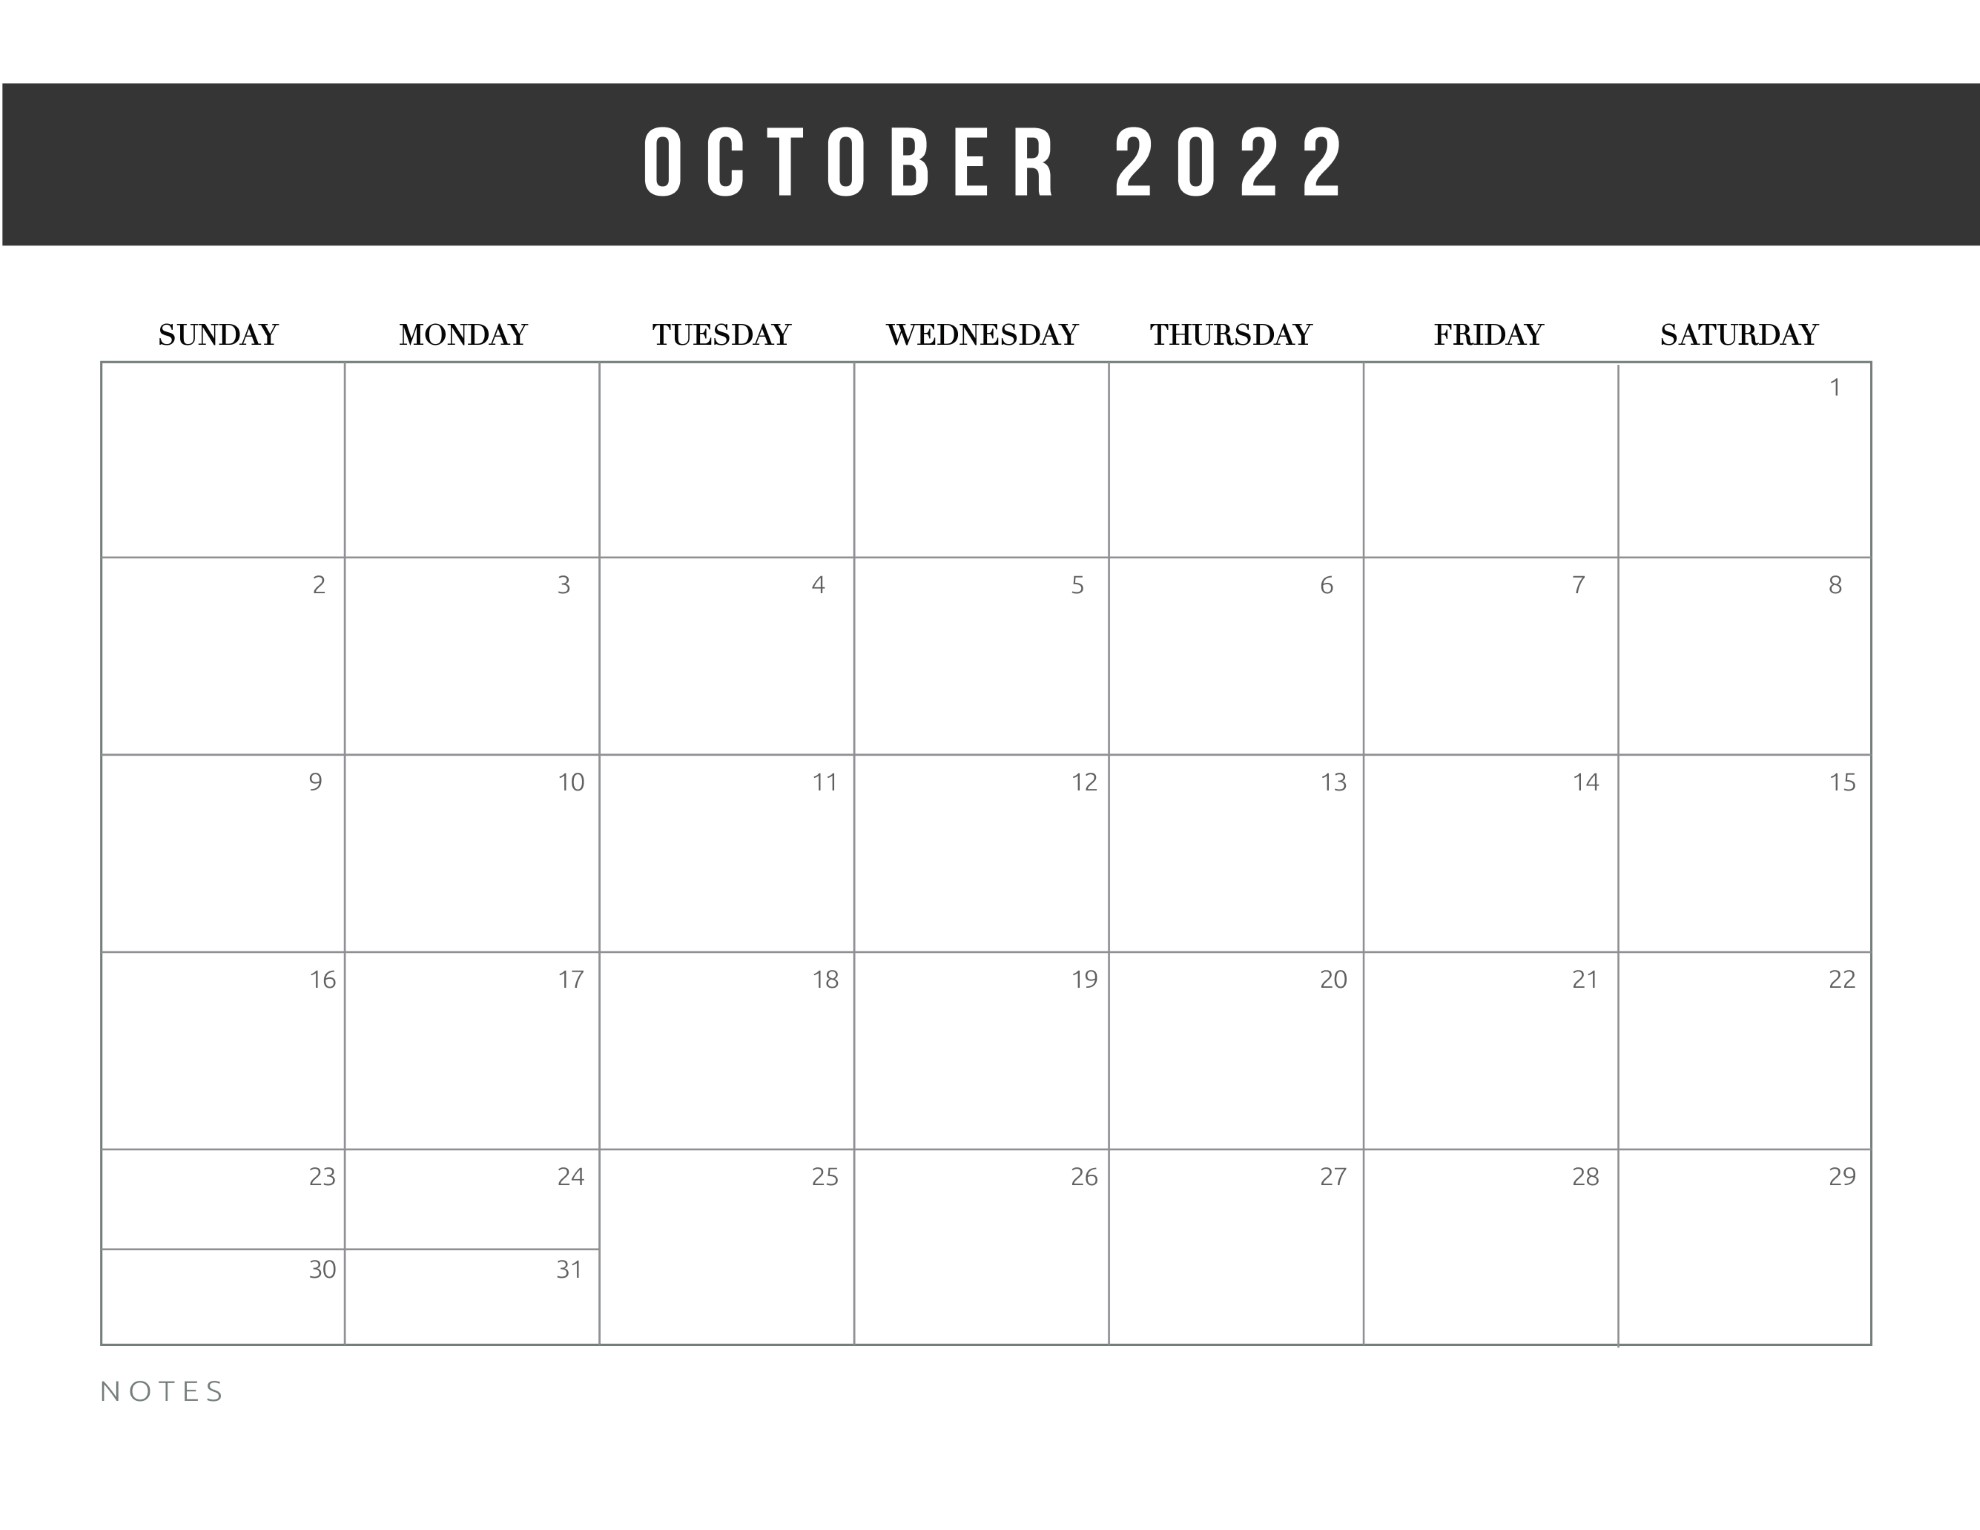 October 2022 Calendar Page Free Printable October 2022 Calendars - World Of Printables